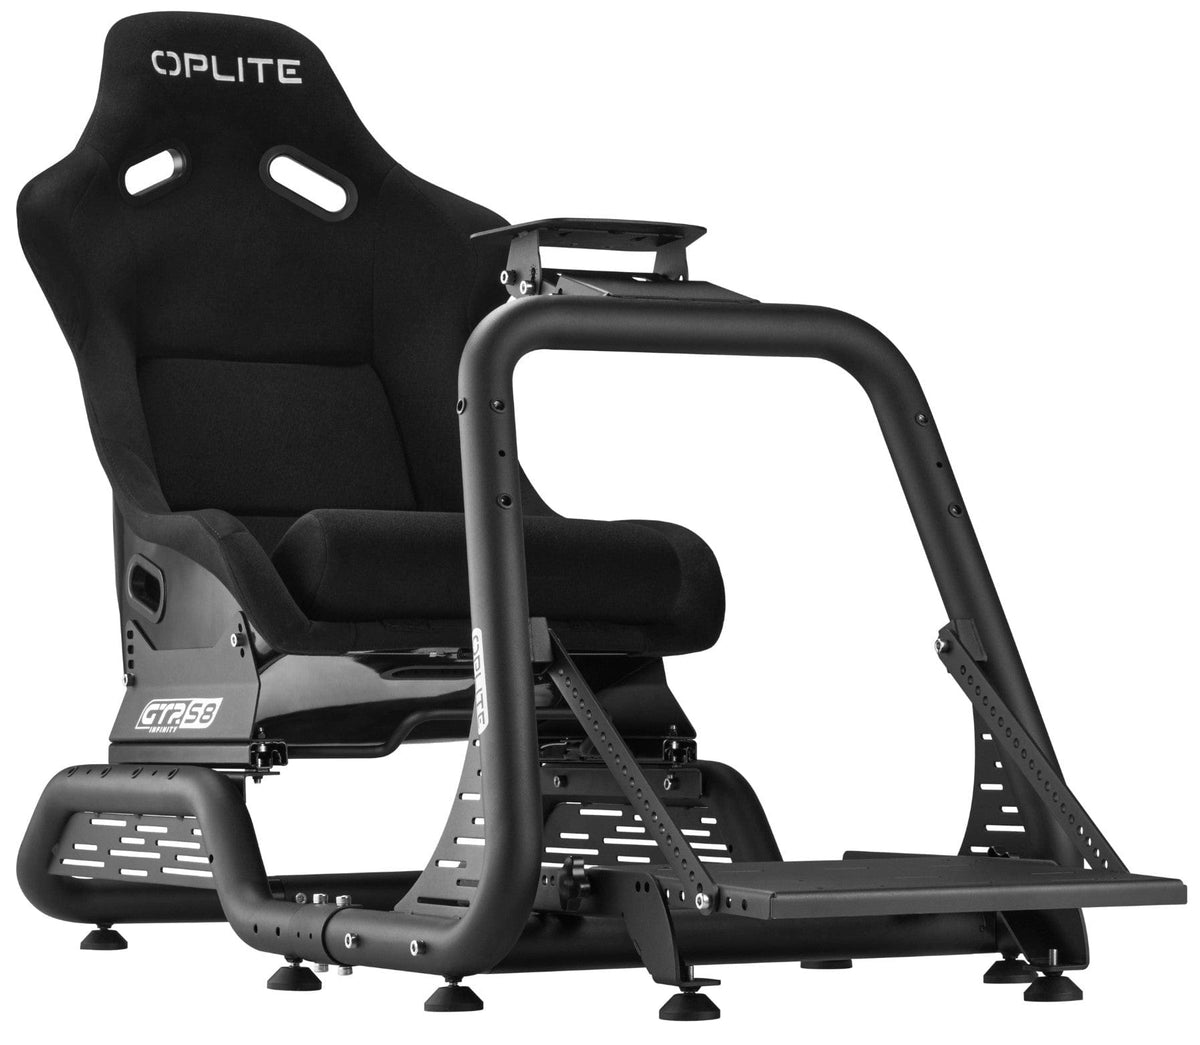 Oplite - GTR S8 Infinity Cockpit